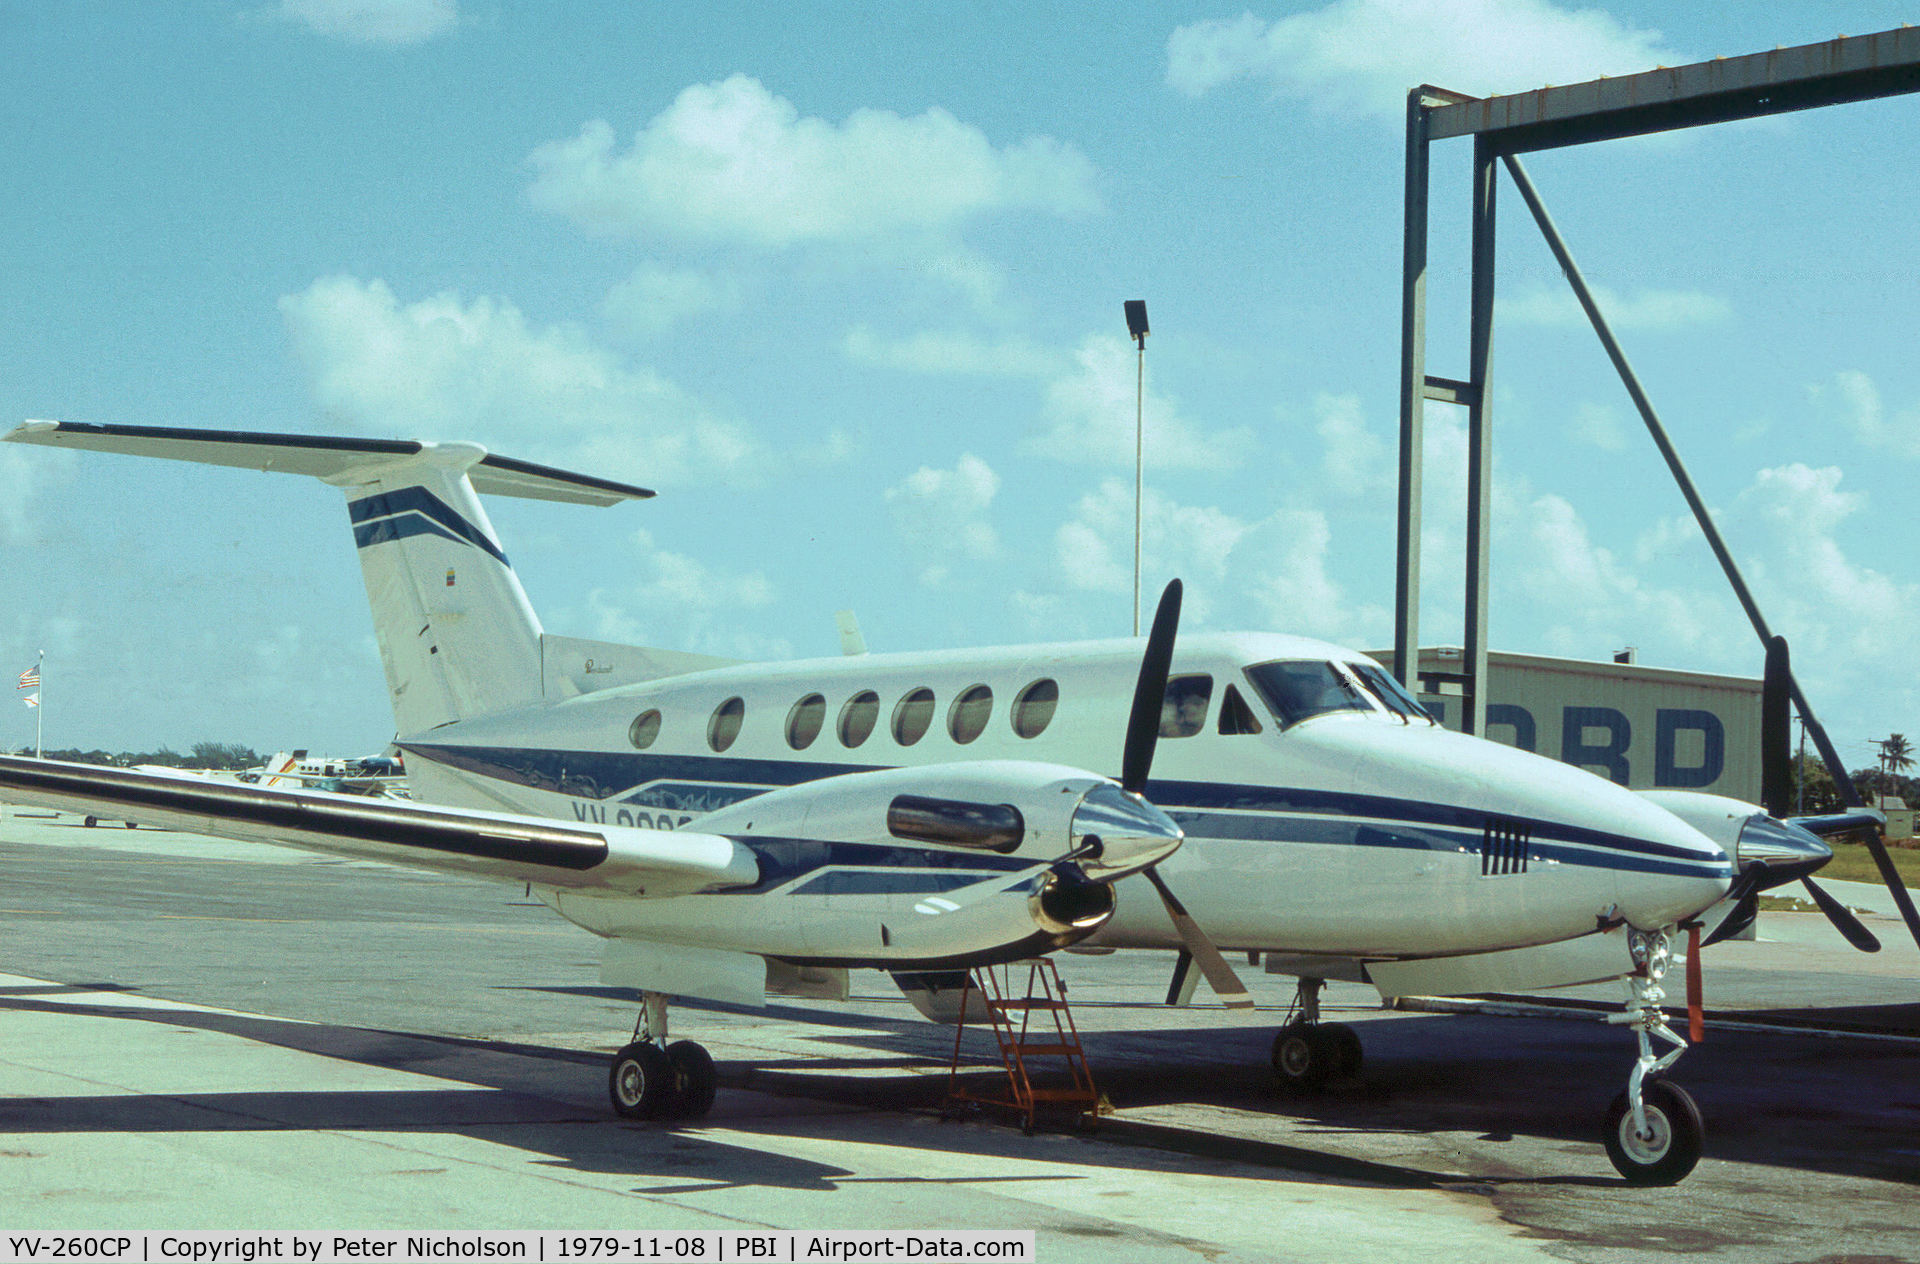 YV-260CP, Beech 200 C/N BB-500, Beech Super King Air 200 as seen at West Palm Beach in November 1979.